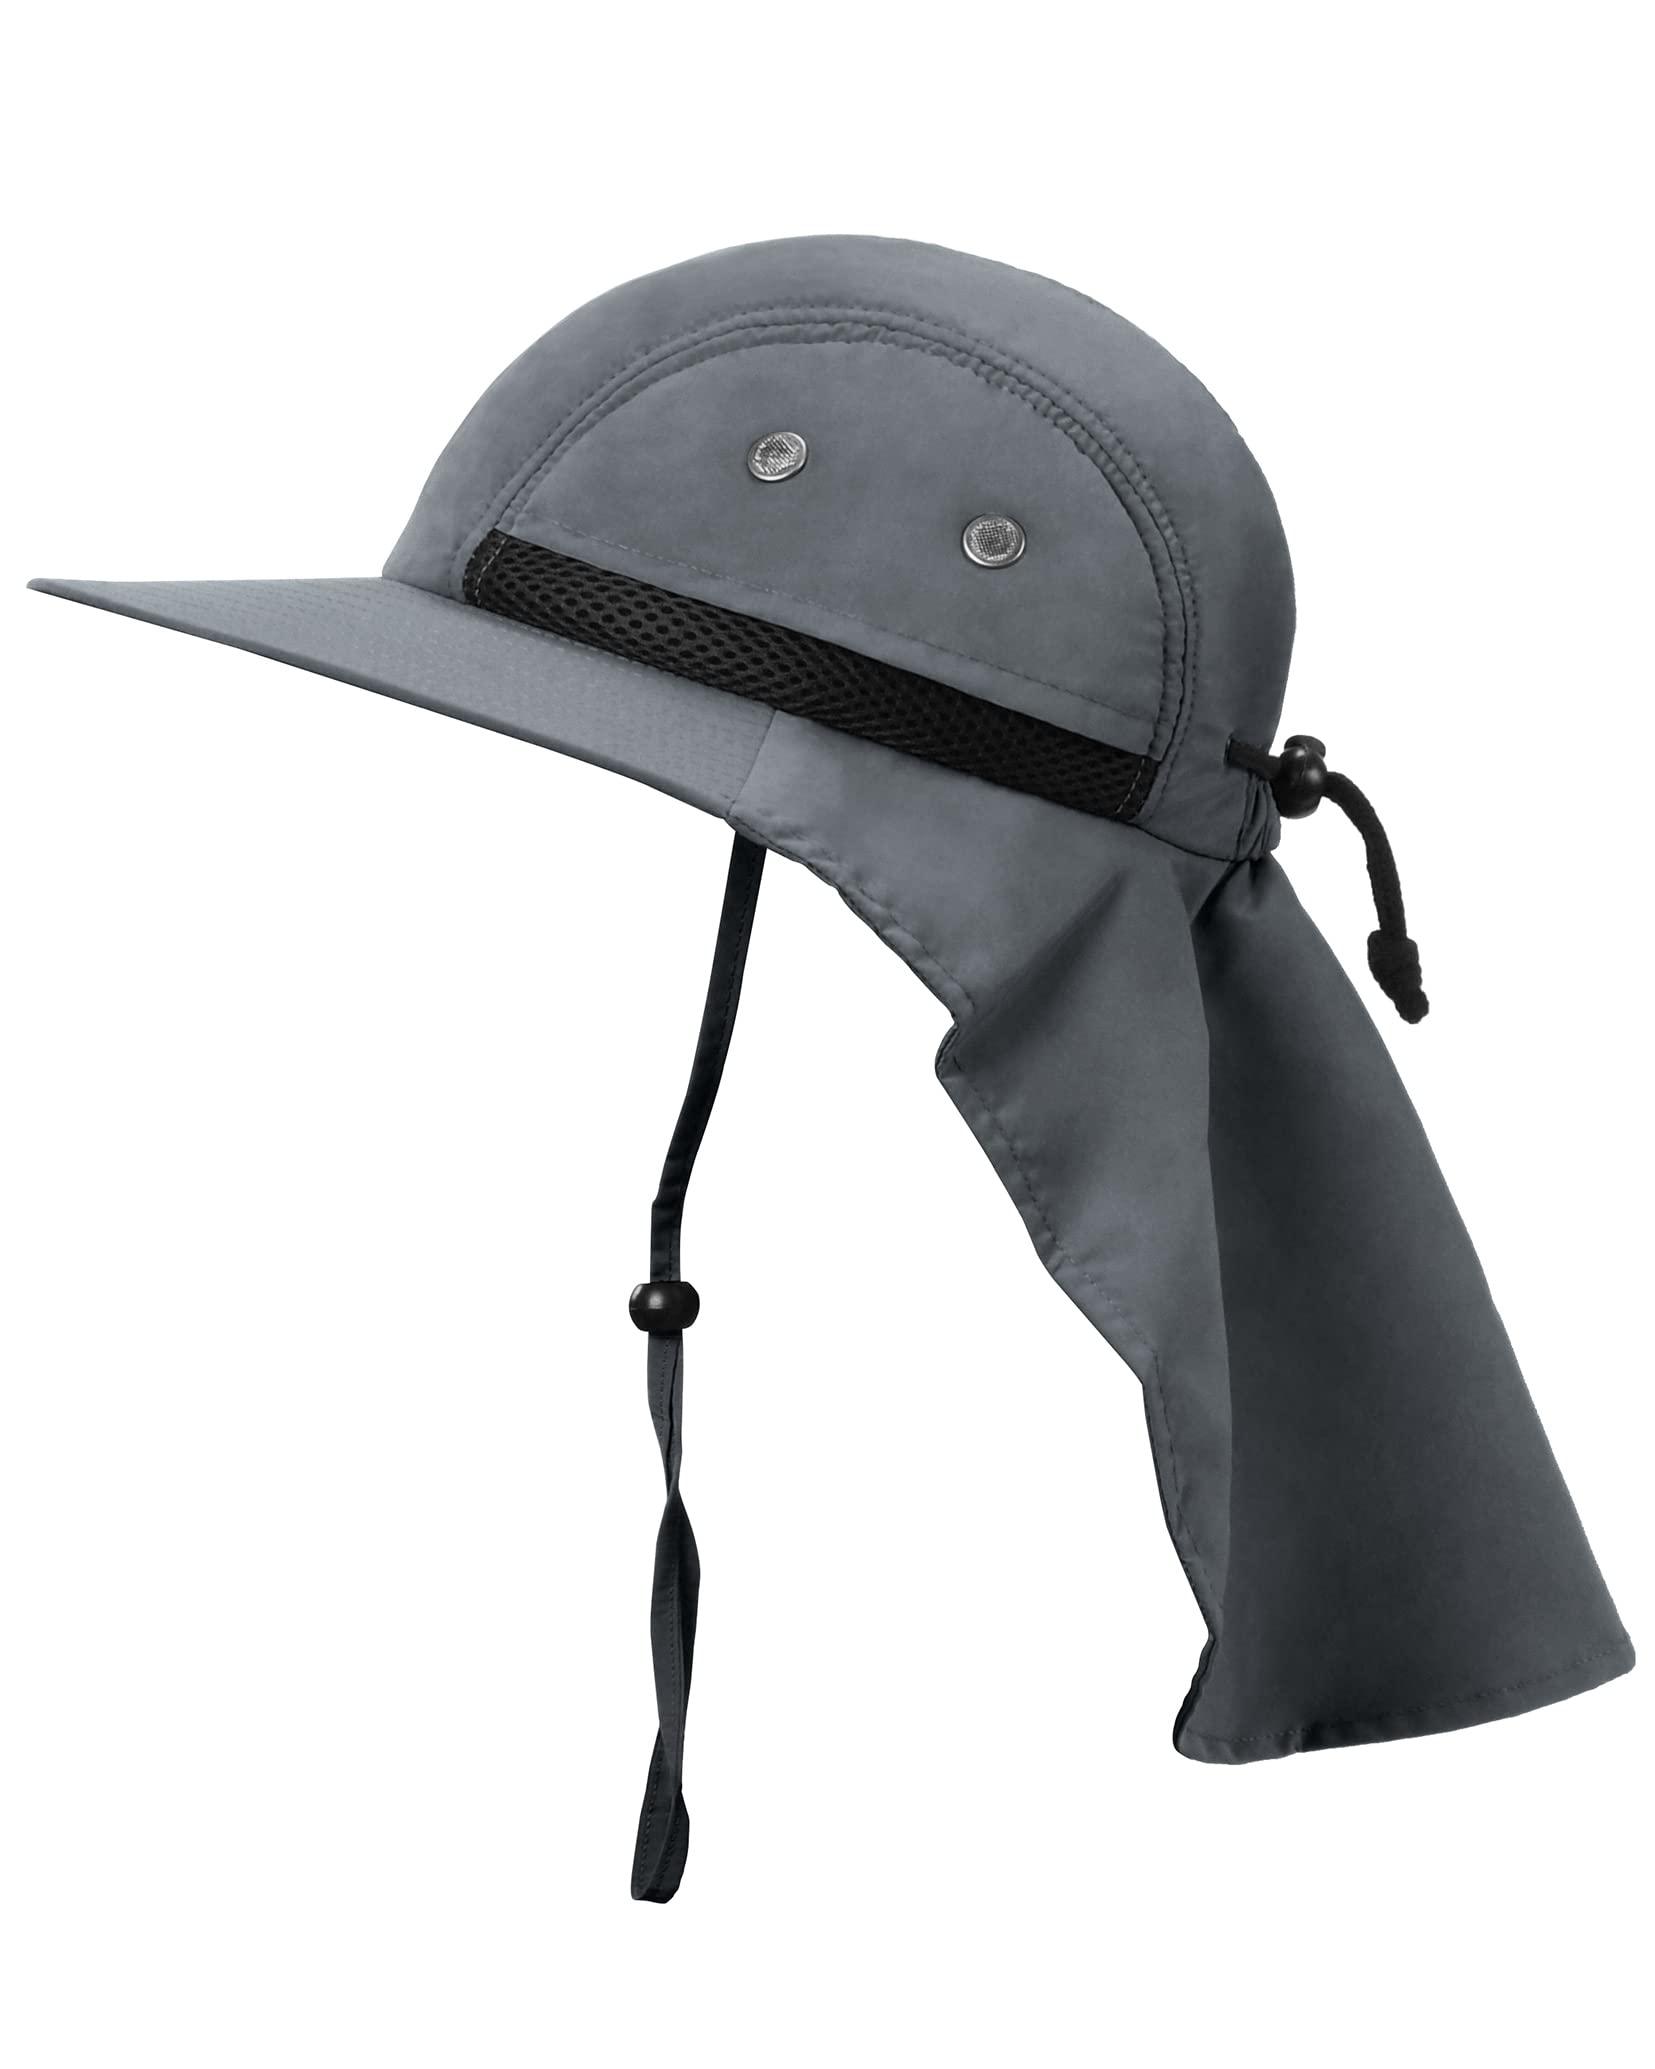 Tirrinia Womens Ponytail Safari Sun Hat, Upf 50+ Sun Protection